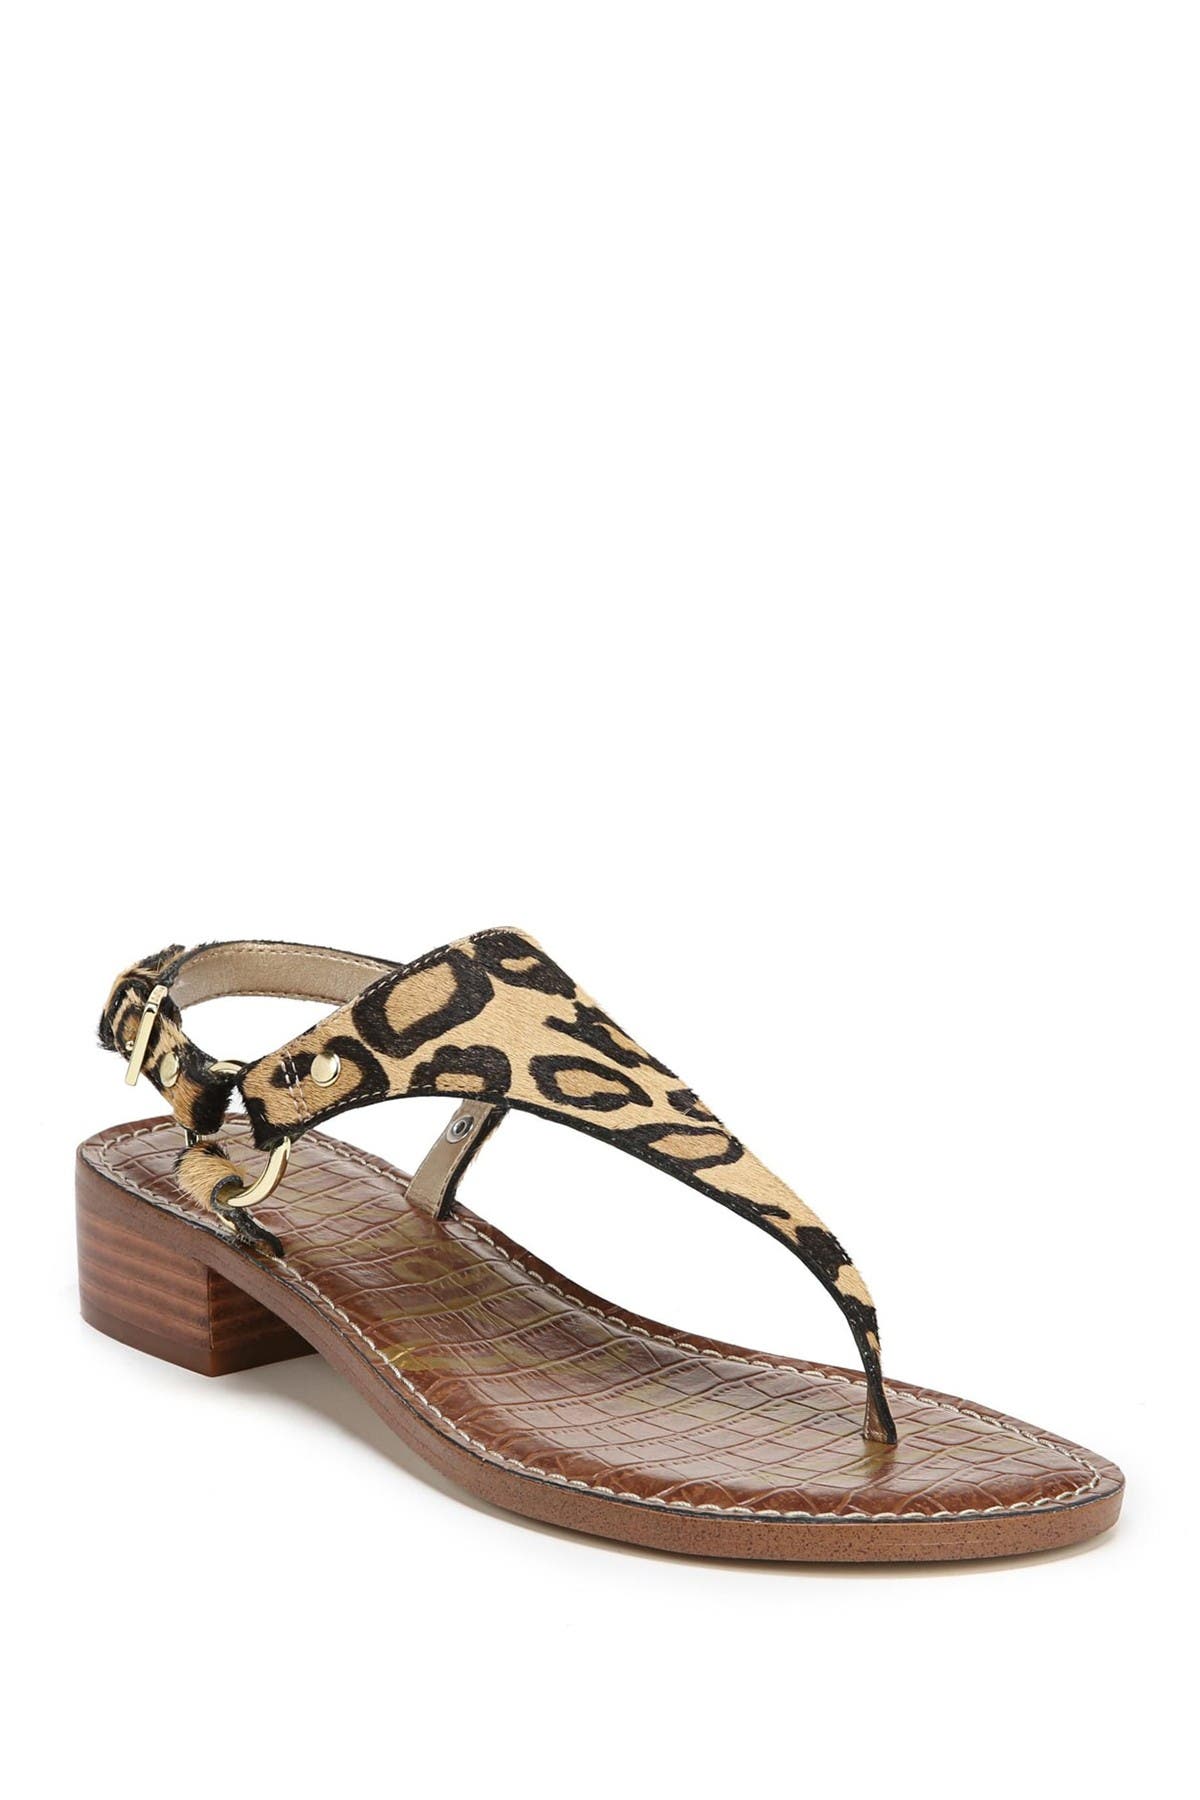 sam edelman women's jude heeled sandal